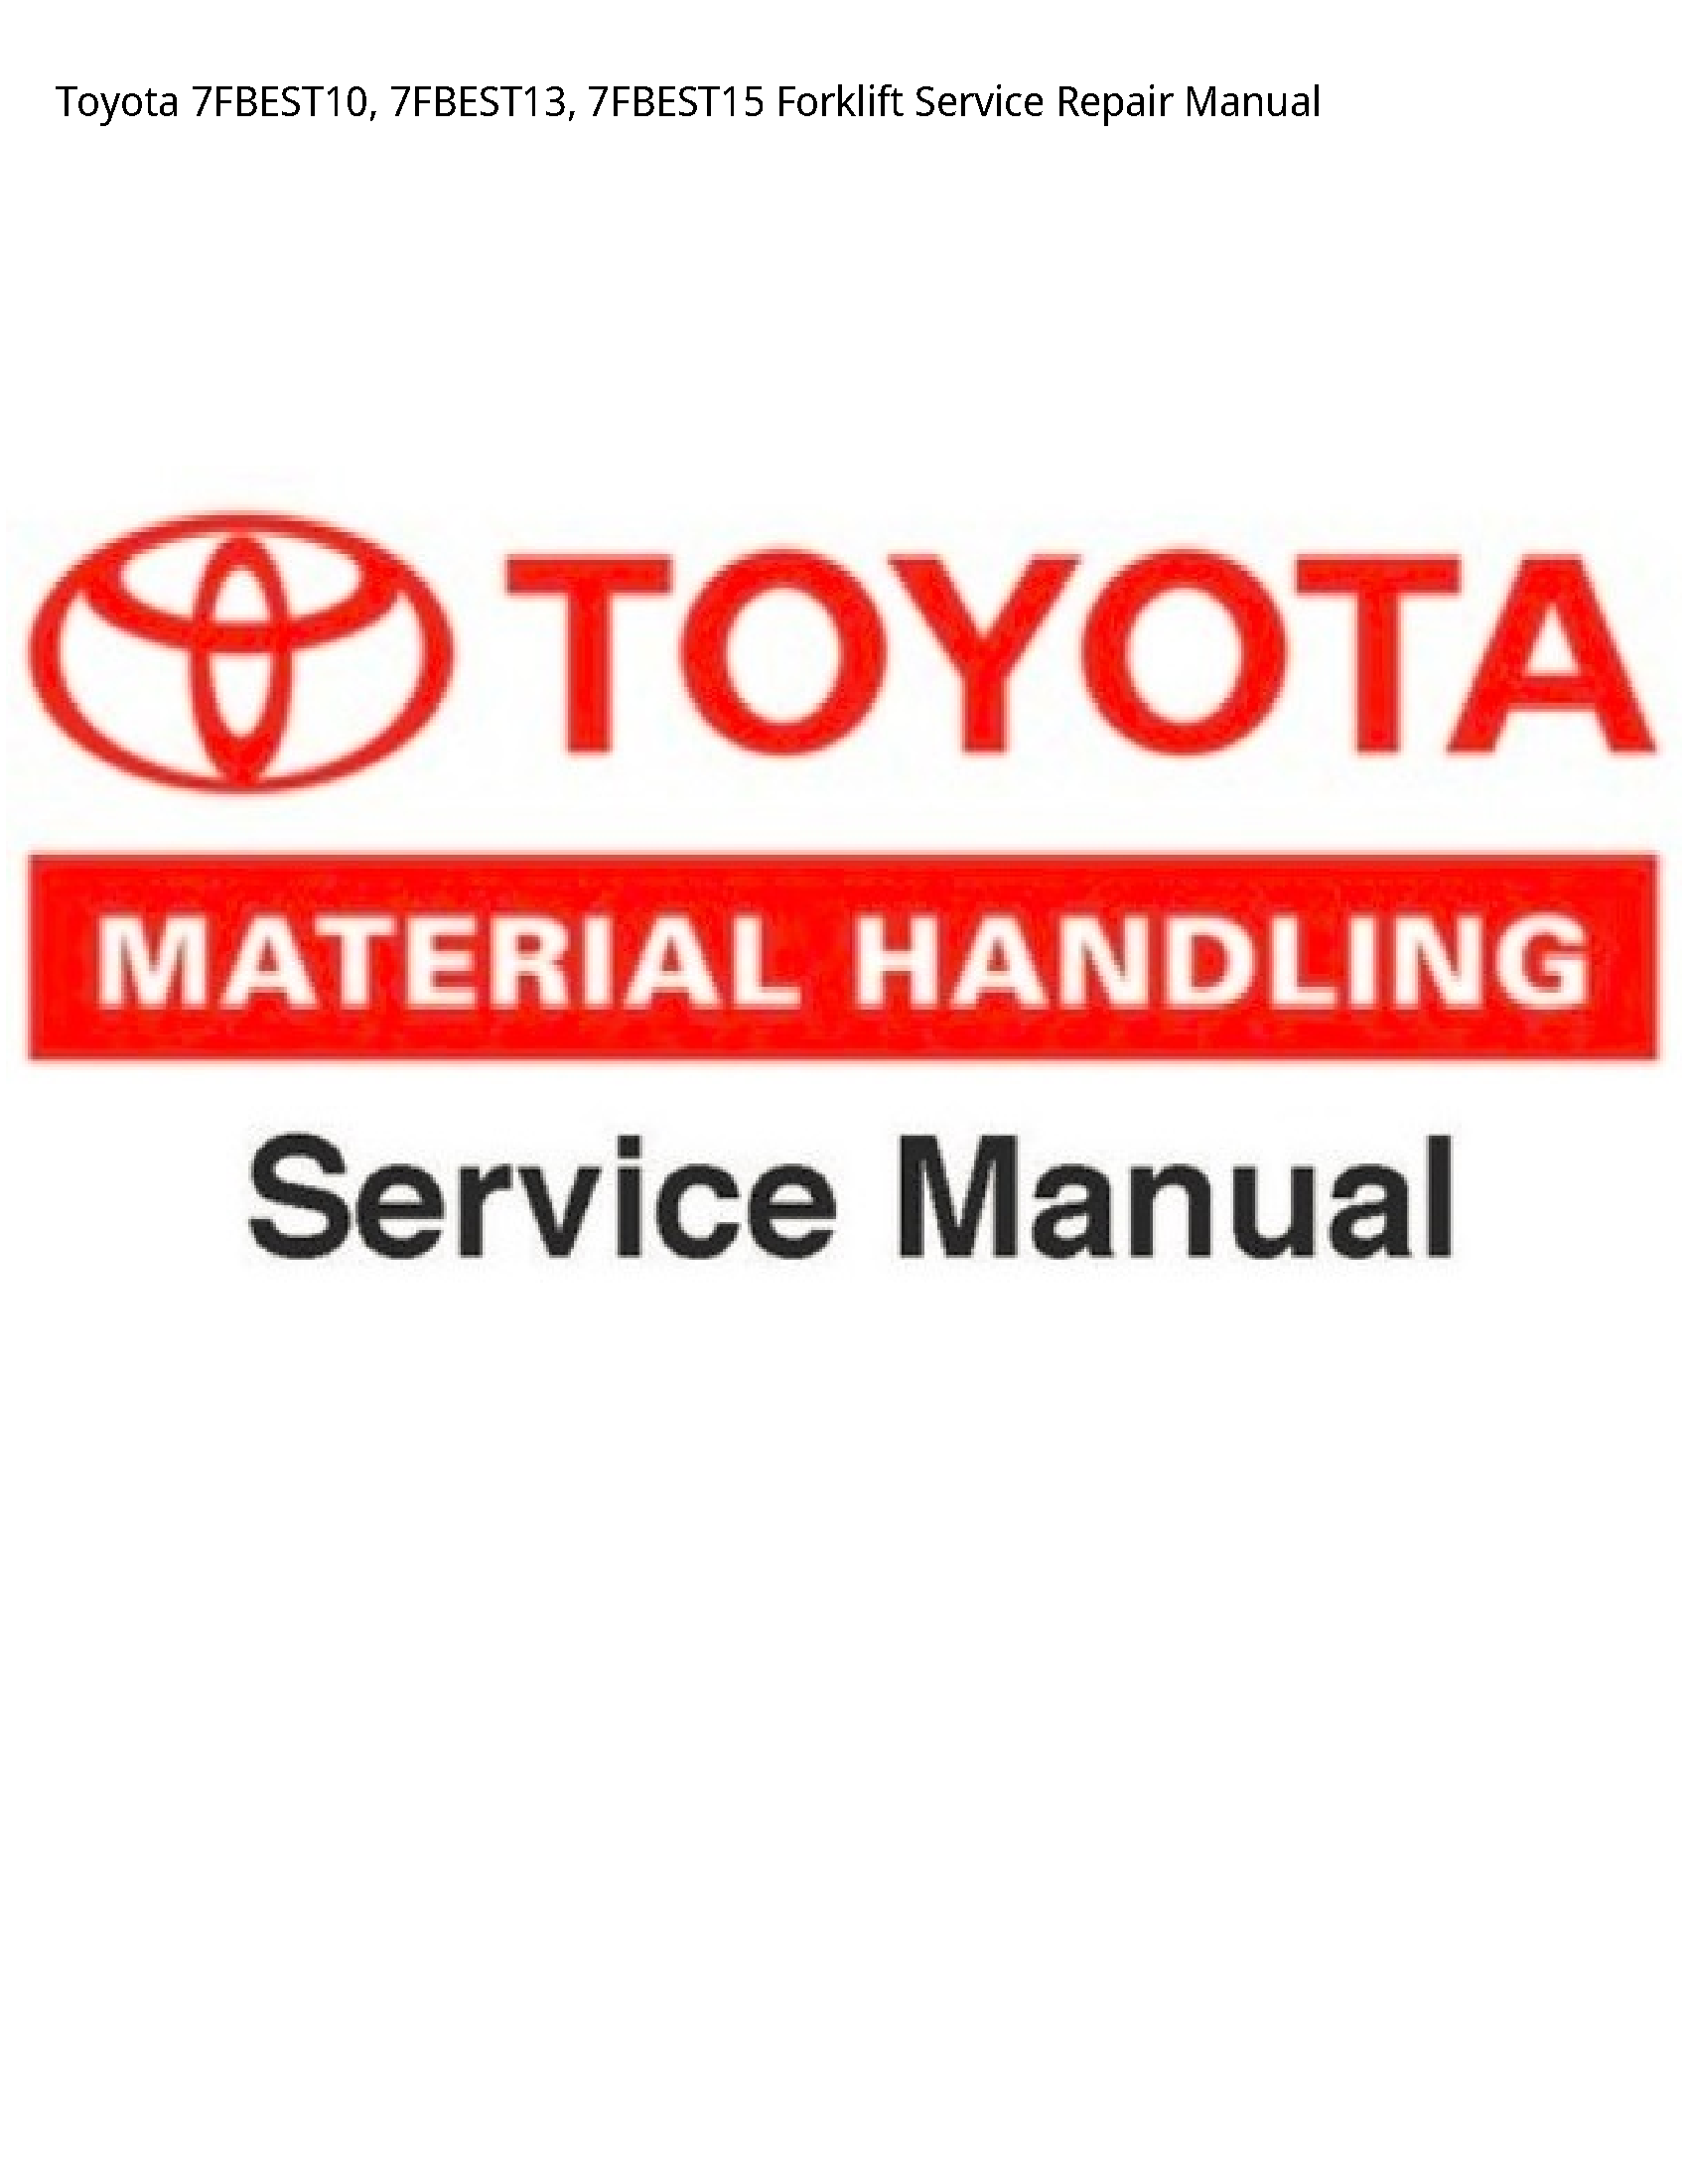 Toyota 7FBEST10 Forklift manual